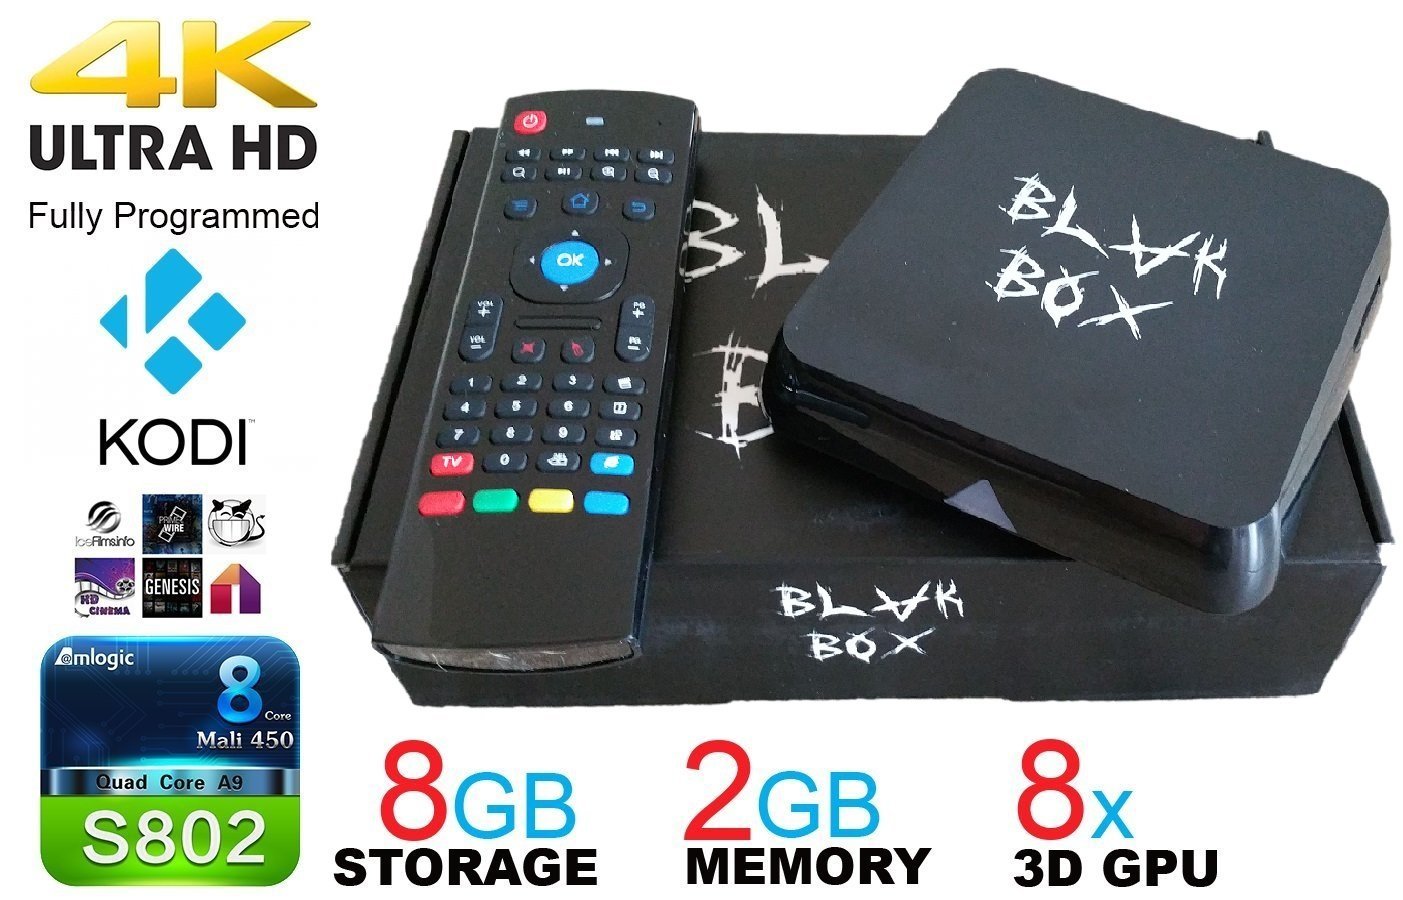 Review: Blvk Box Media Player